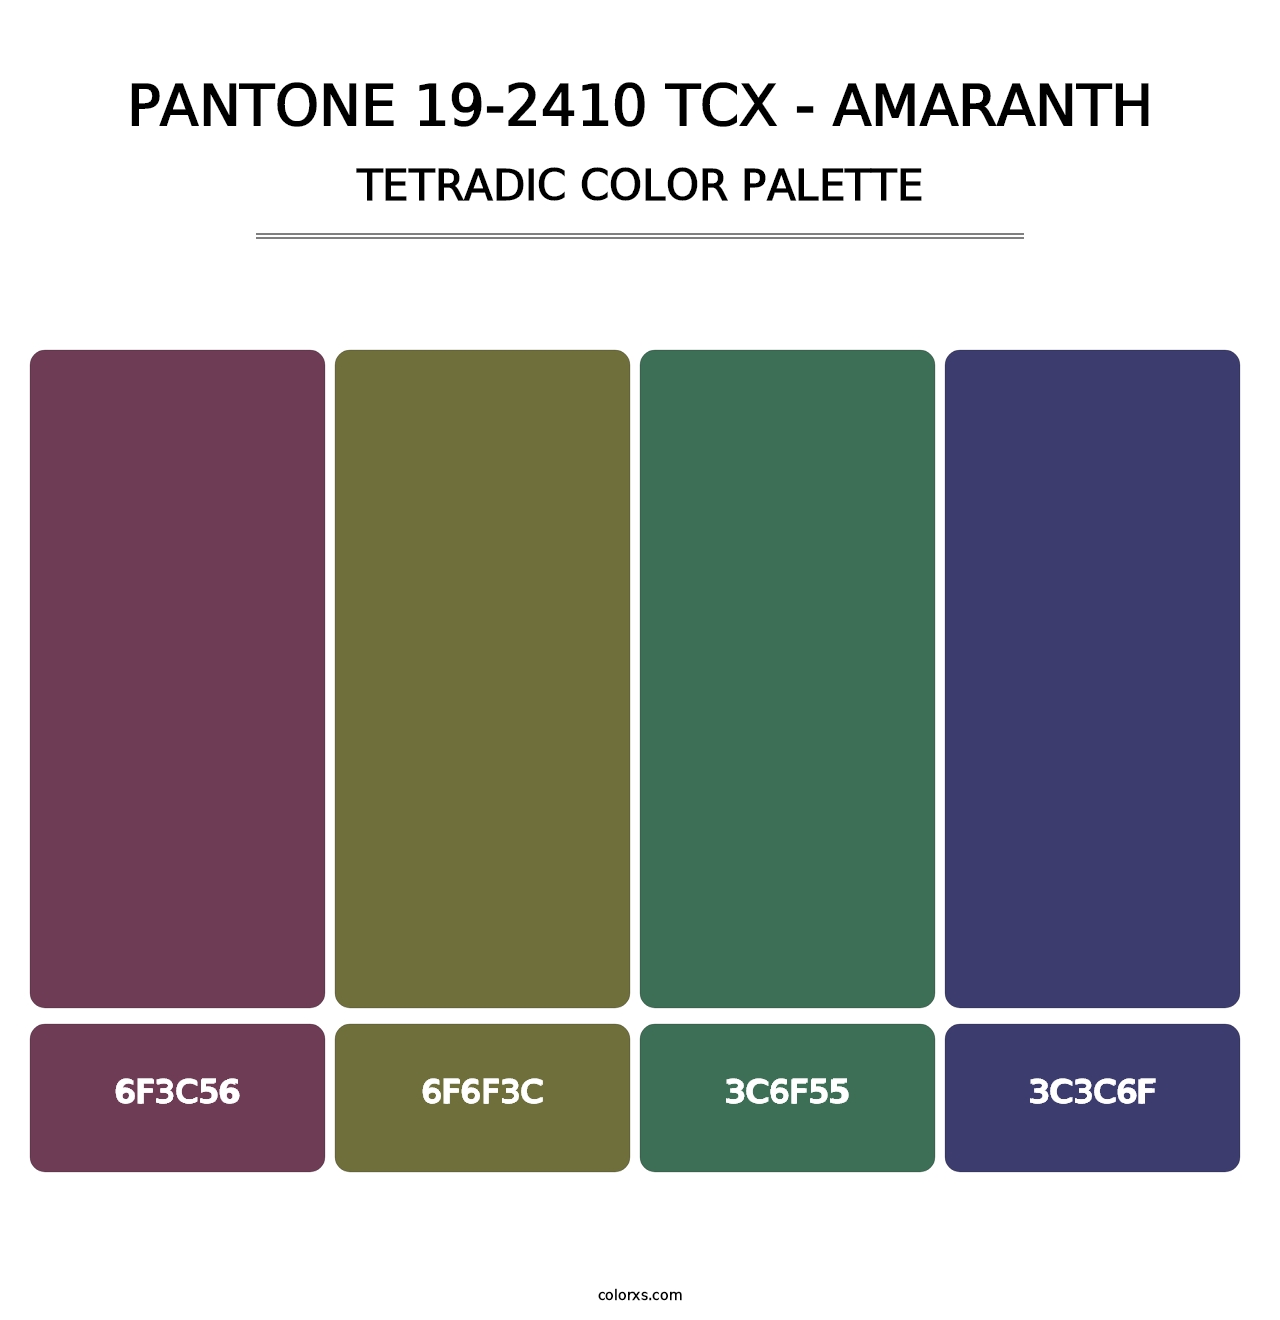 PANTONE 19-2410 TCX - Amaranth - Tetradic Color Palette